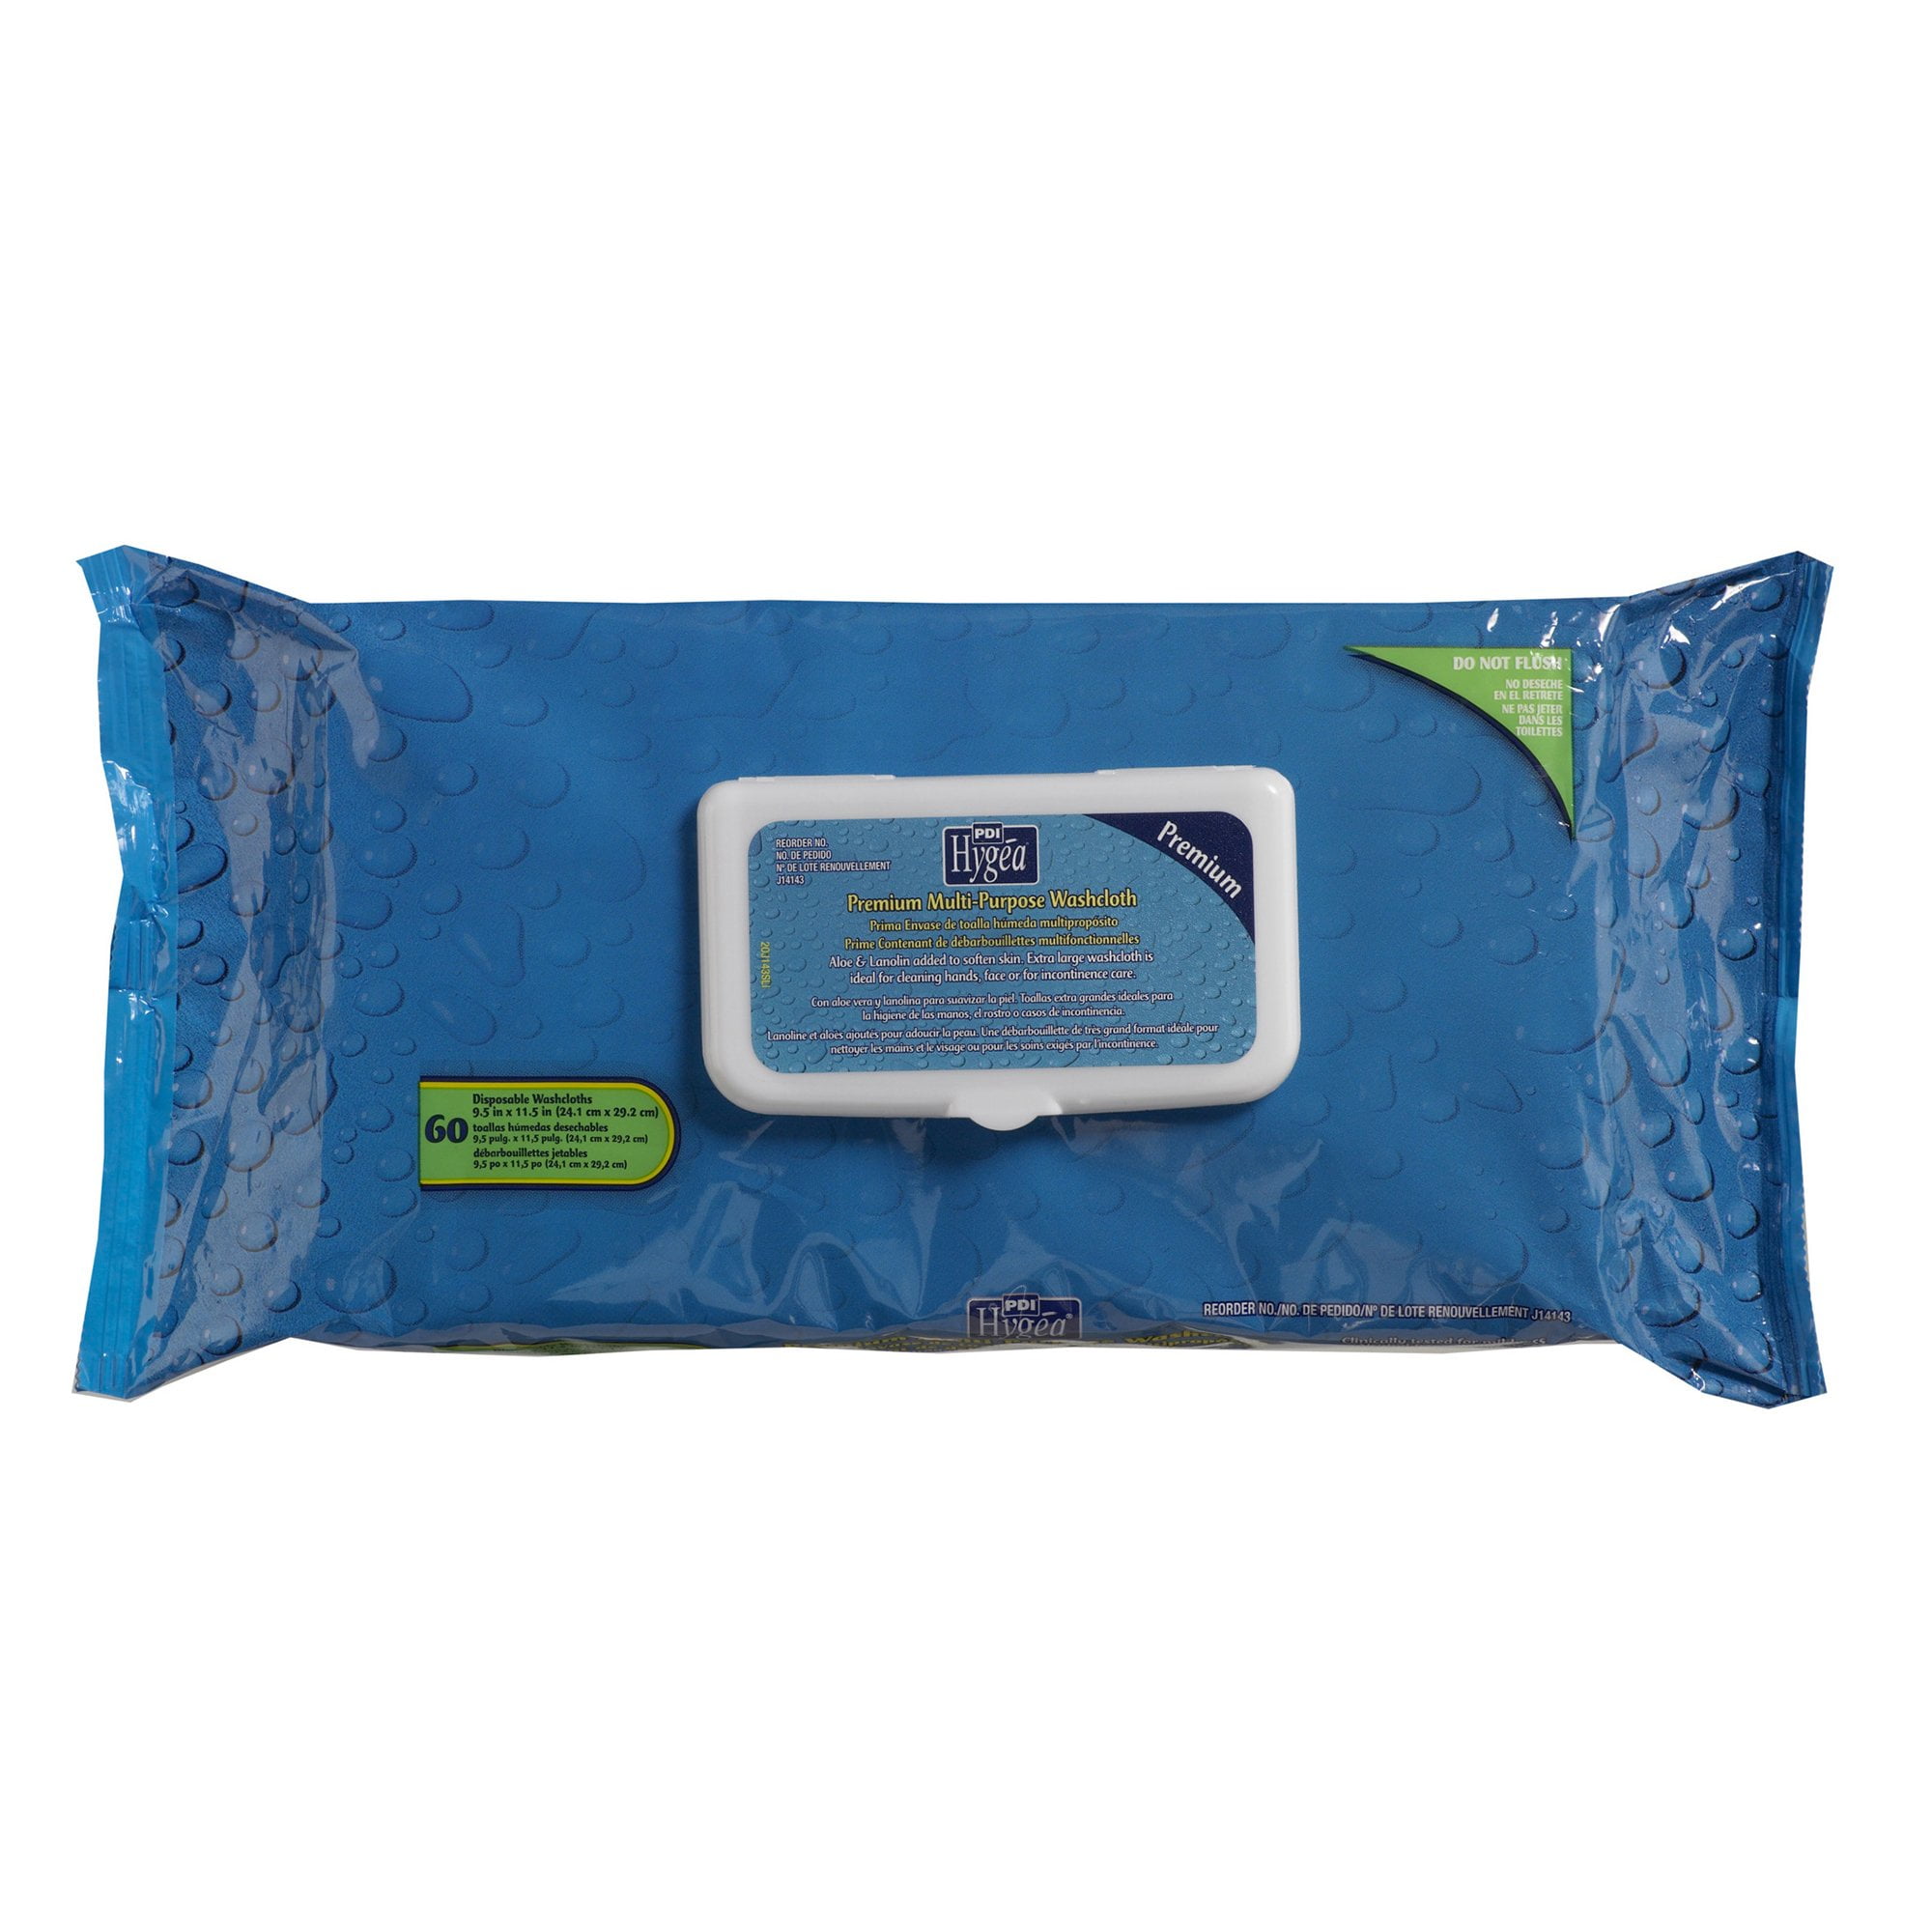  ProCare Washcloth Wipe, 8x12, Soft Pack, 50 Pack, Vitamin  E/Aloe, CRW-050 - Case of 600 : Health & Household